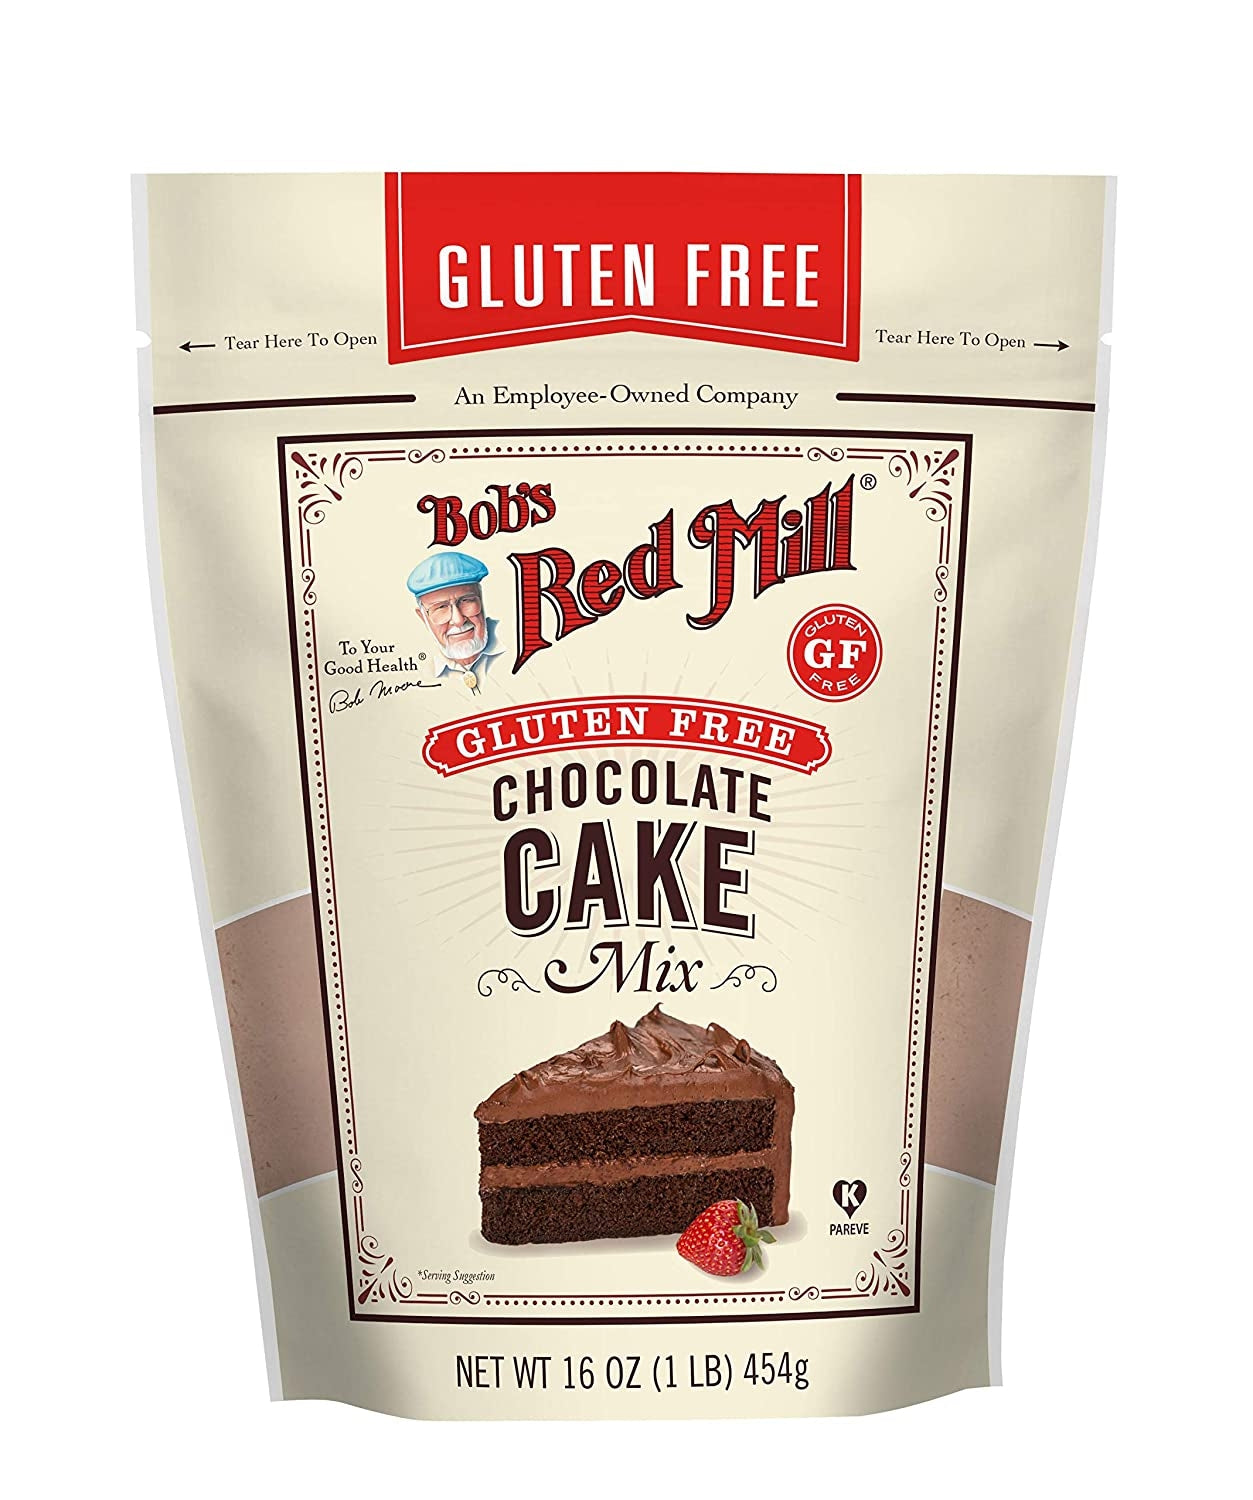 BOB'S RED MILL Gluten Free Chocolate Cake Mix, 454g, Gluten Free